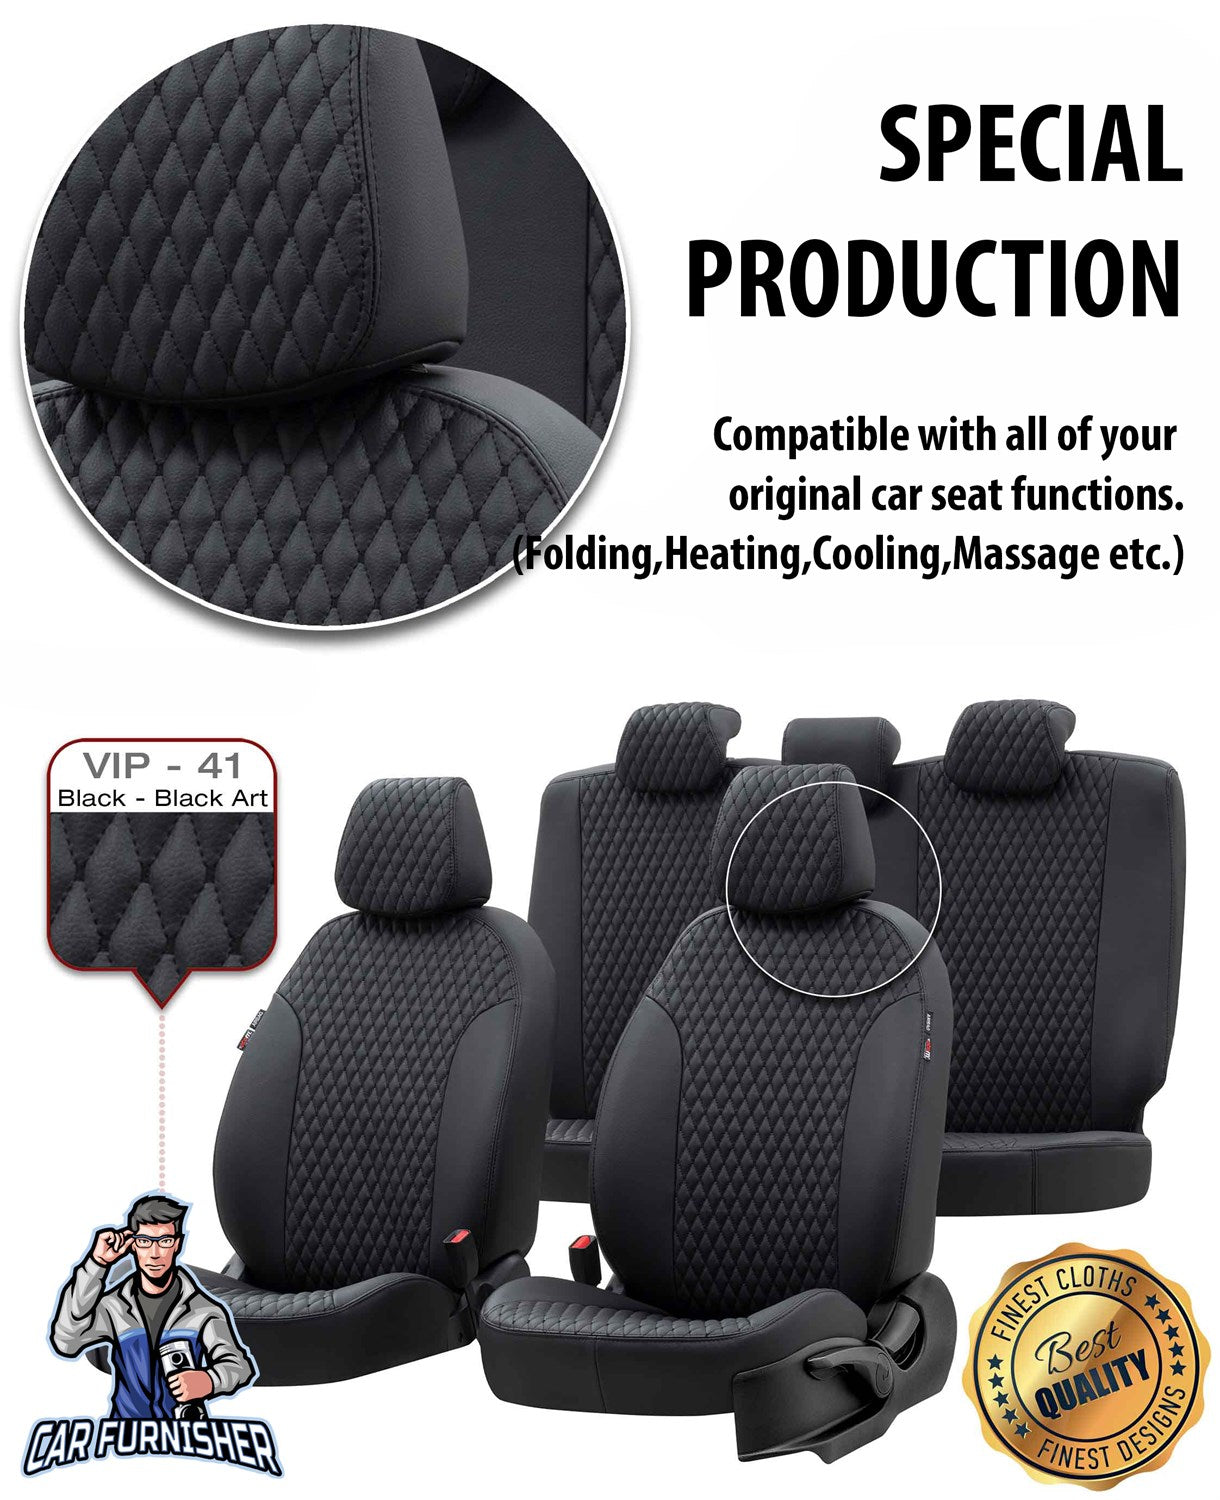 Honda City Seat Covers Amsterdam Leather Design Black Leather